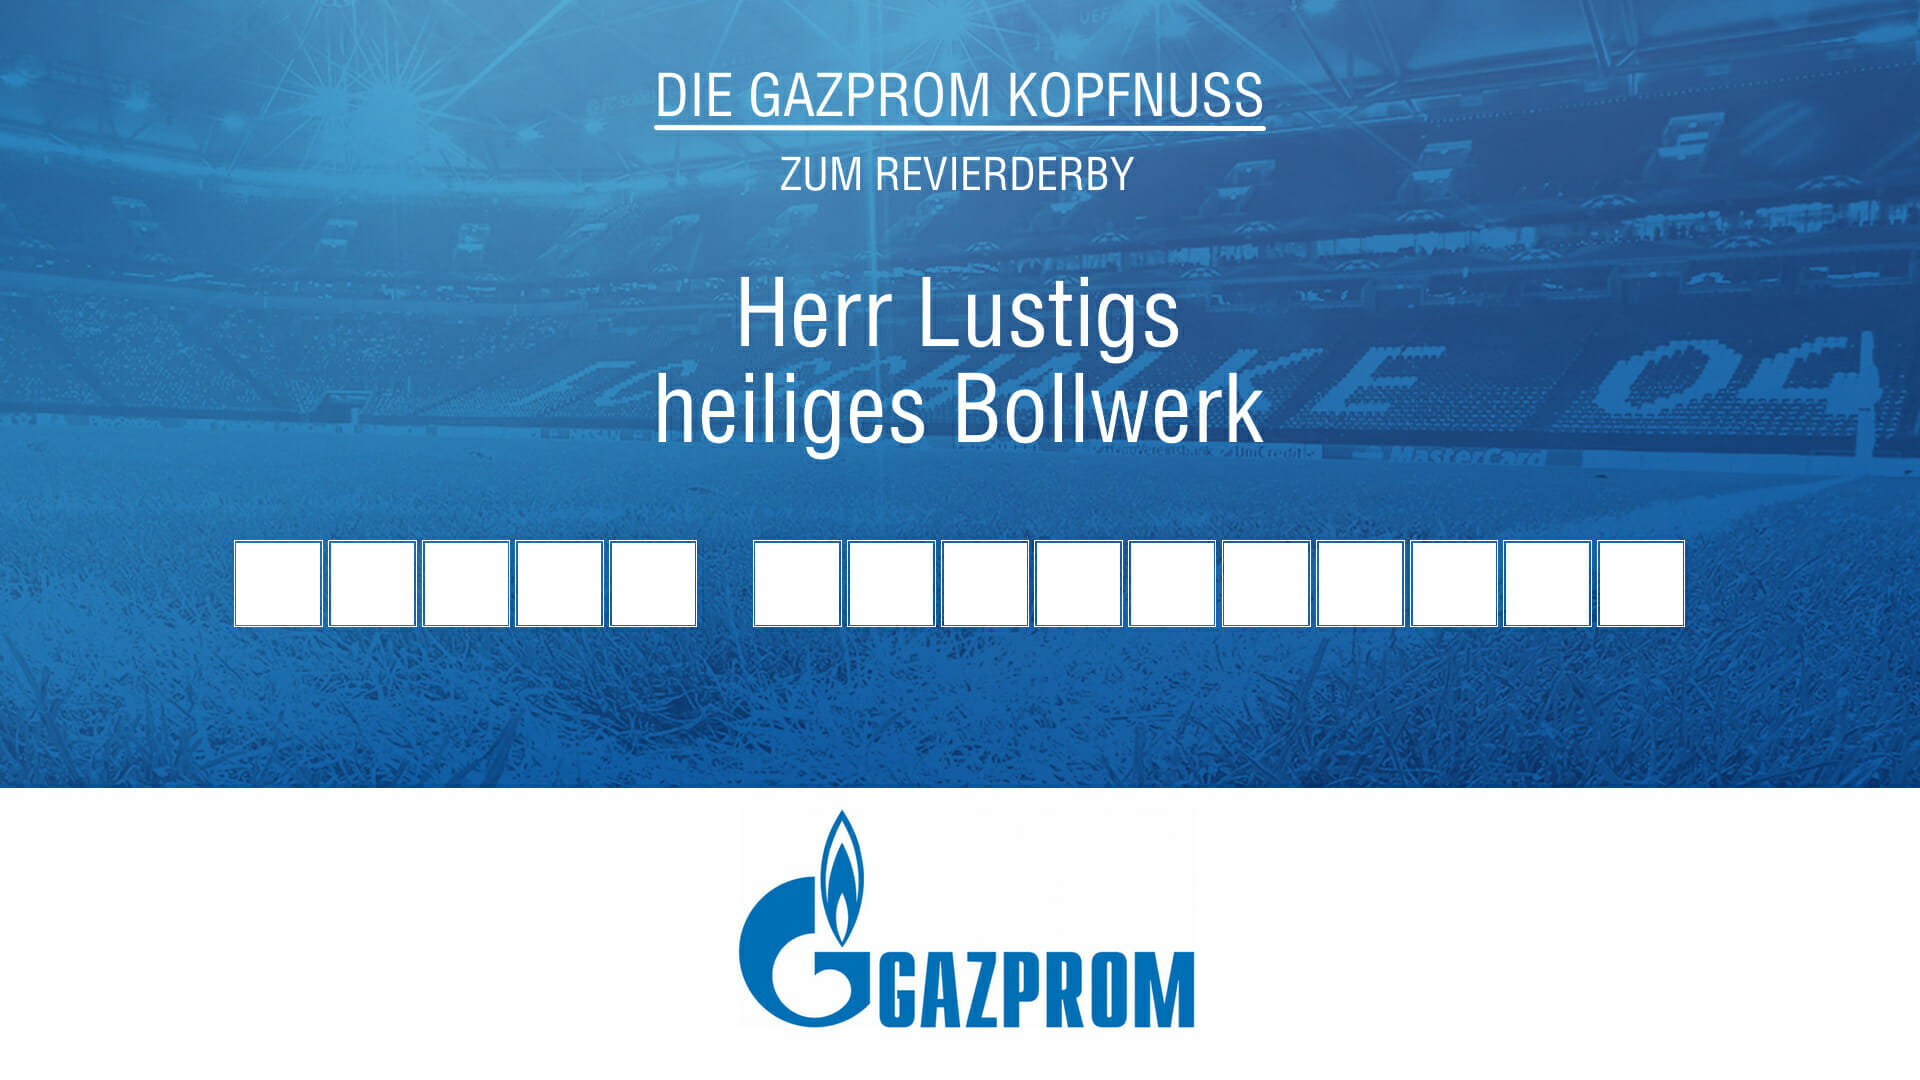 Gazprom Kopfnuss